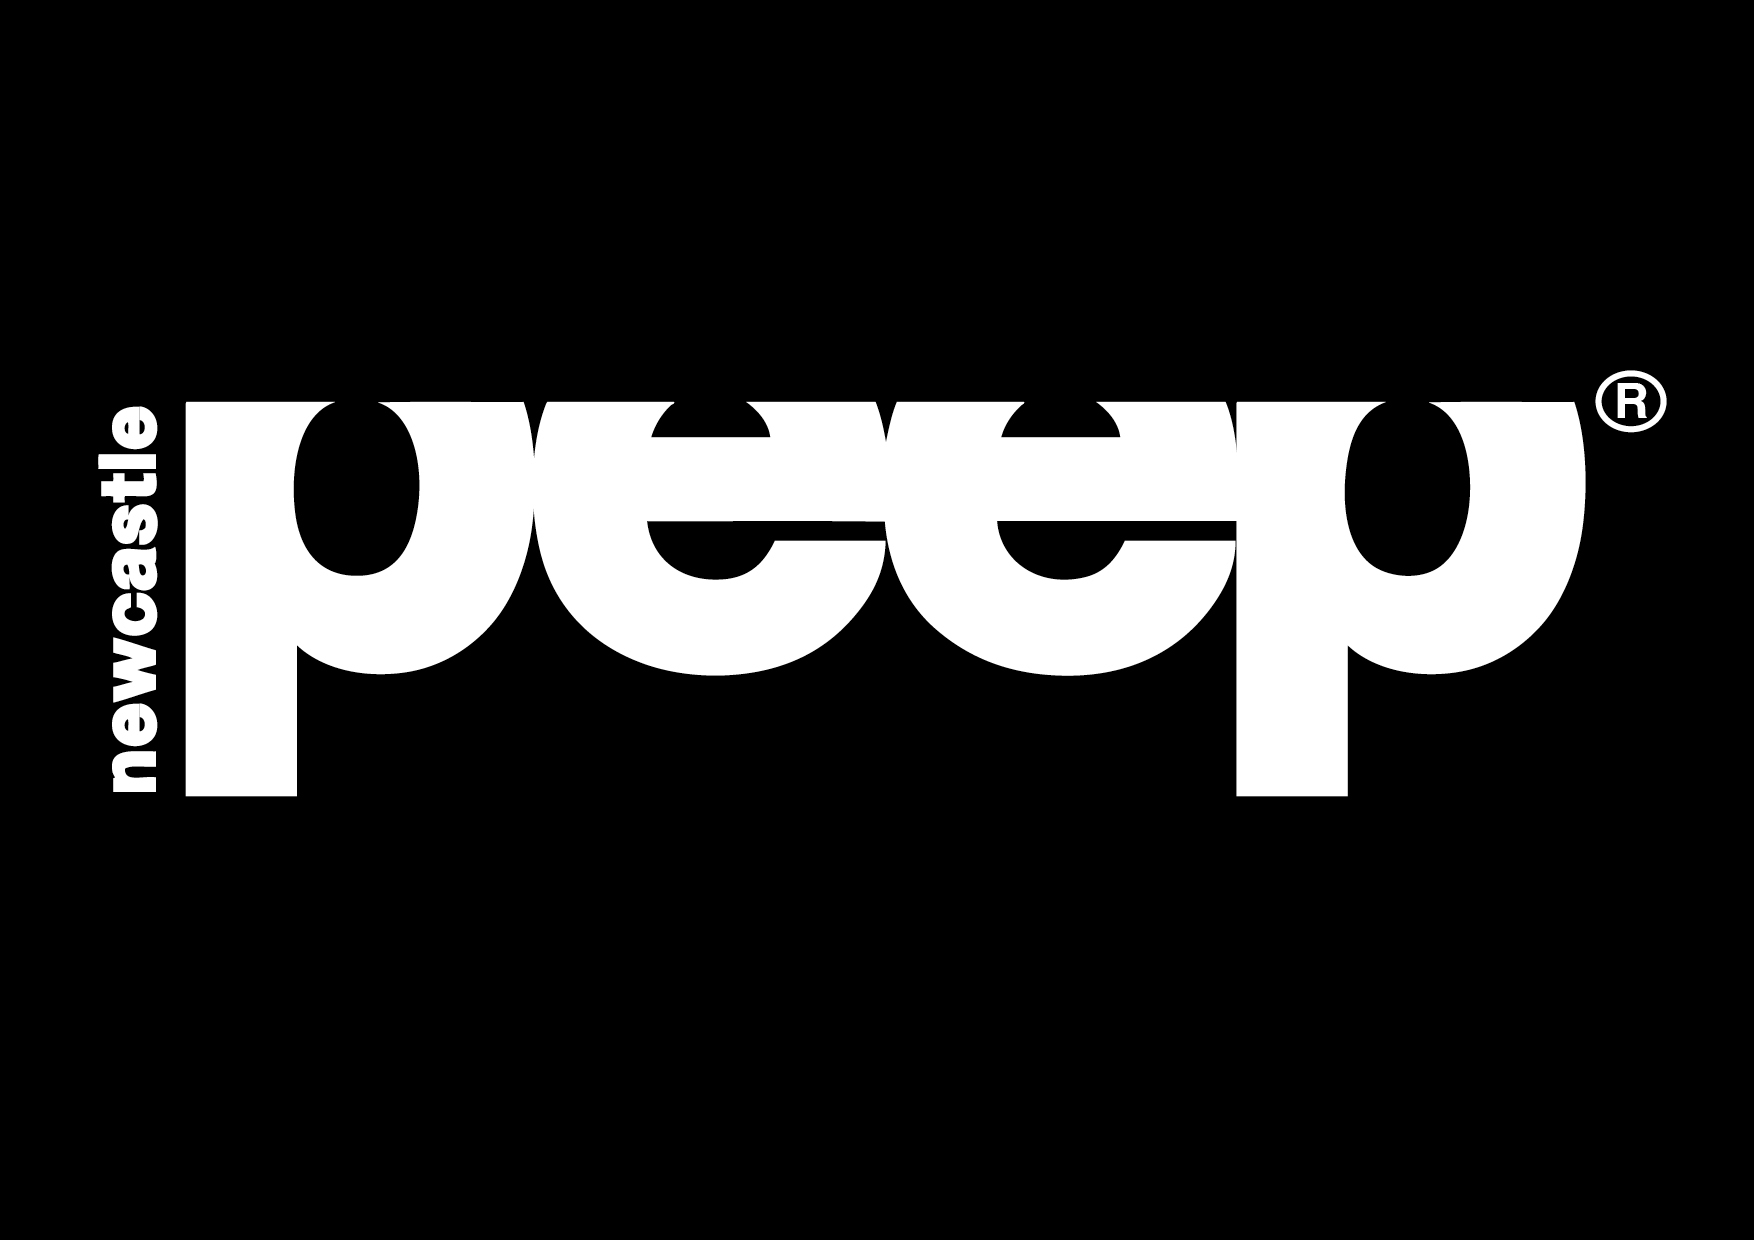 peep website newcastle logo. registered trademark of the peep magazine brand and publication